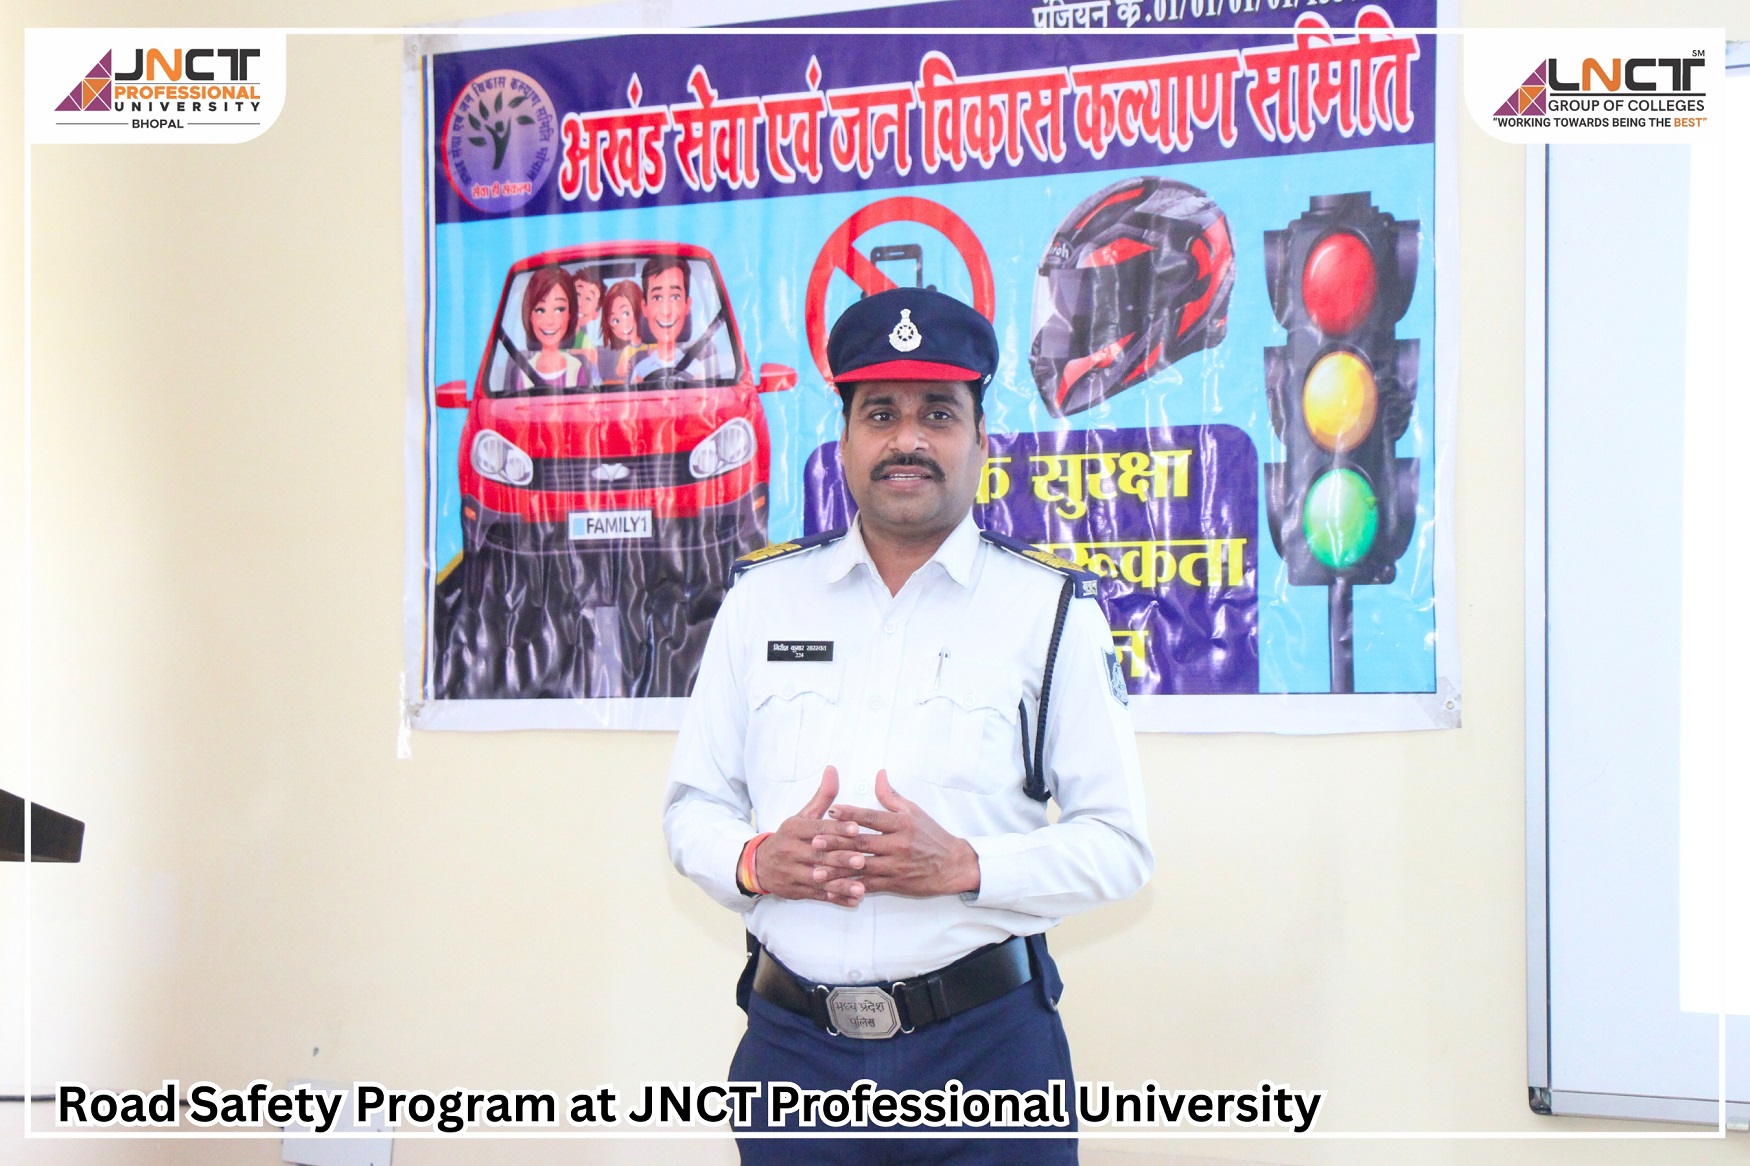 Road Safety Program at JNCT Professional University, Bhopal